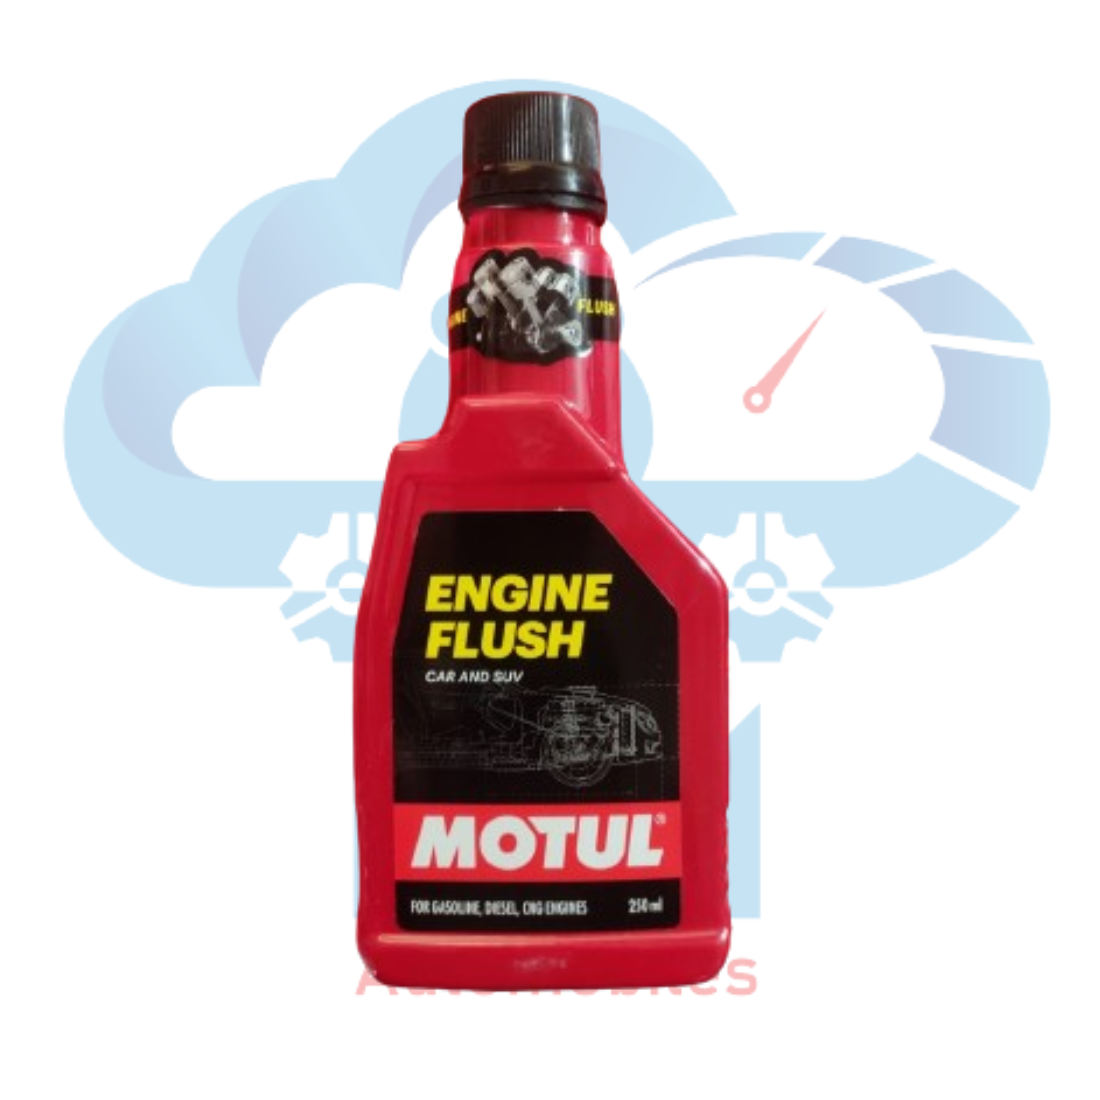 Motul Engine oil Flush for cars and SUV